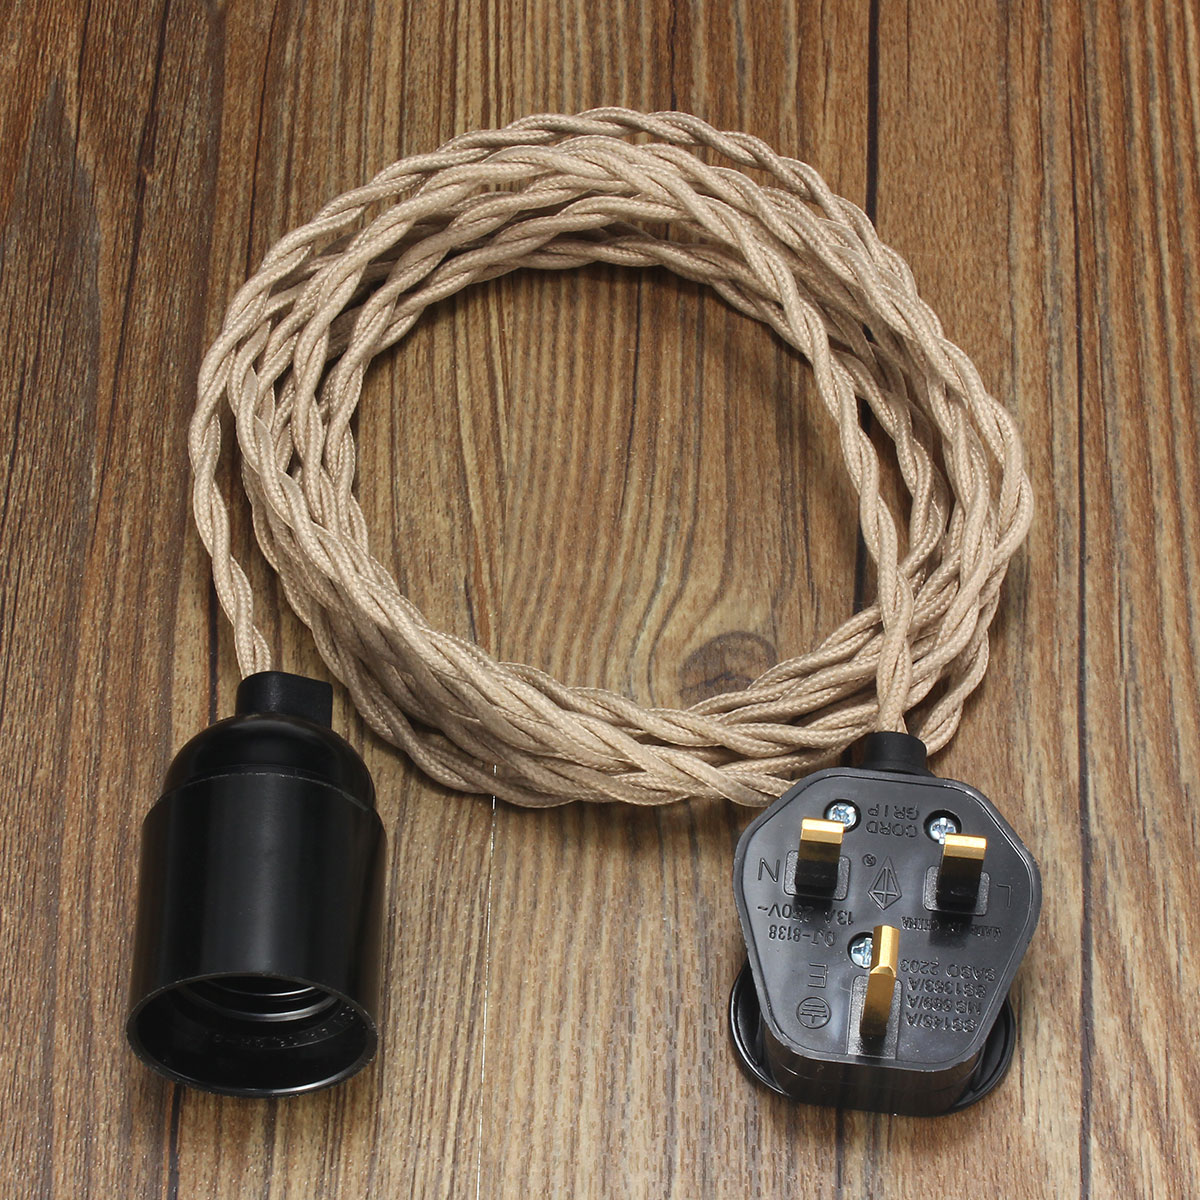 3M-E27-Vintage-Twisted-Fabric-Cable-UK-Plug-In-Pendant-Lamp-Light-Bulb-Holder-Socket-1068749-5